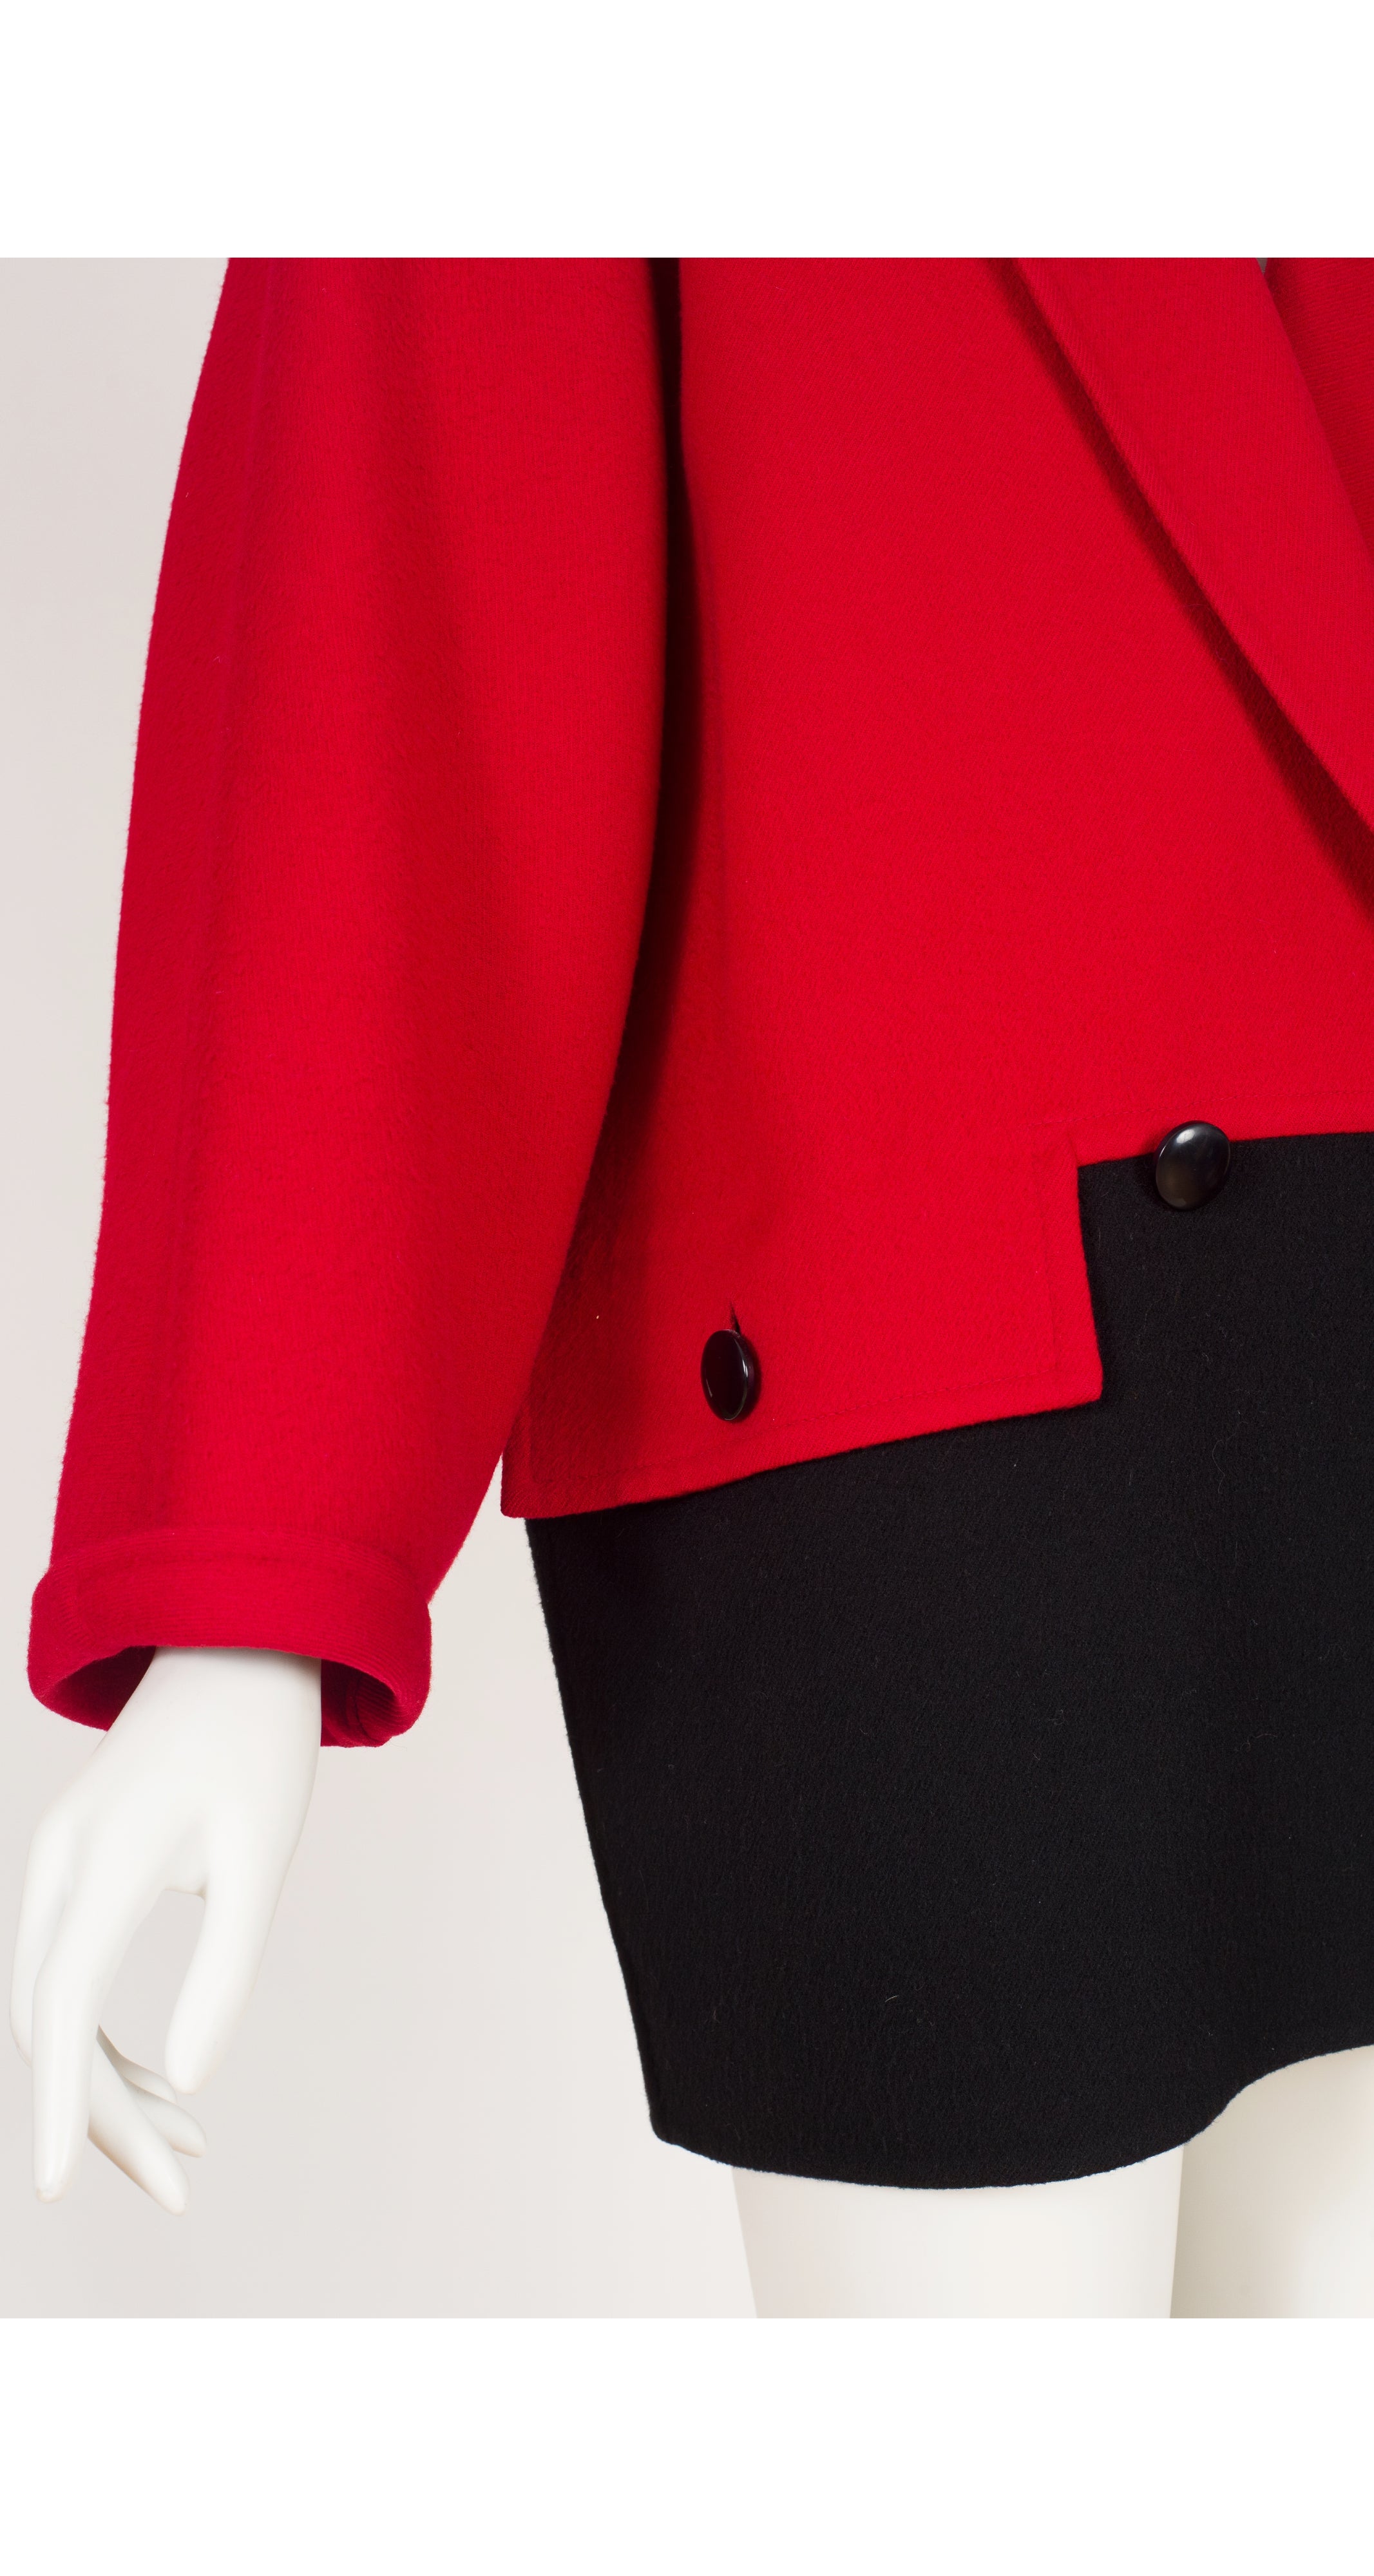 1980s Red & Black Color-Block Wool Shawl Collar Coat